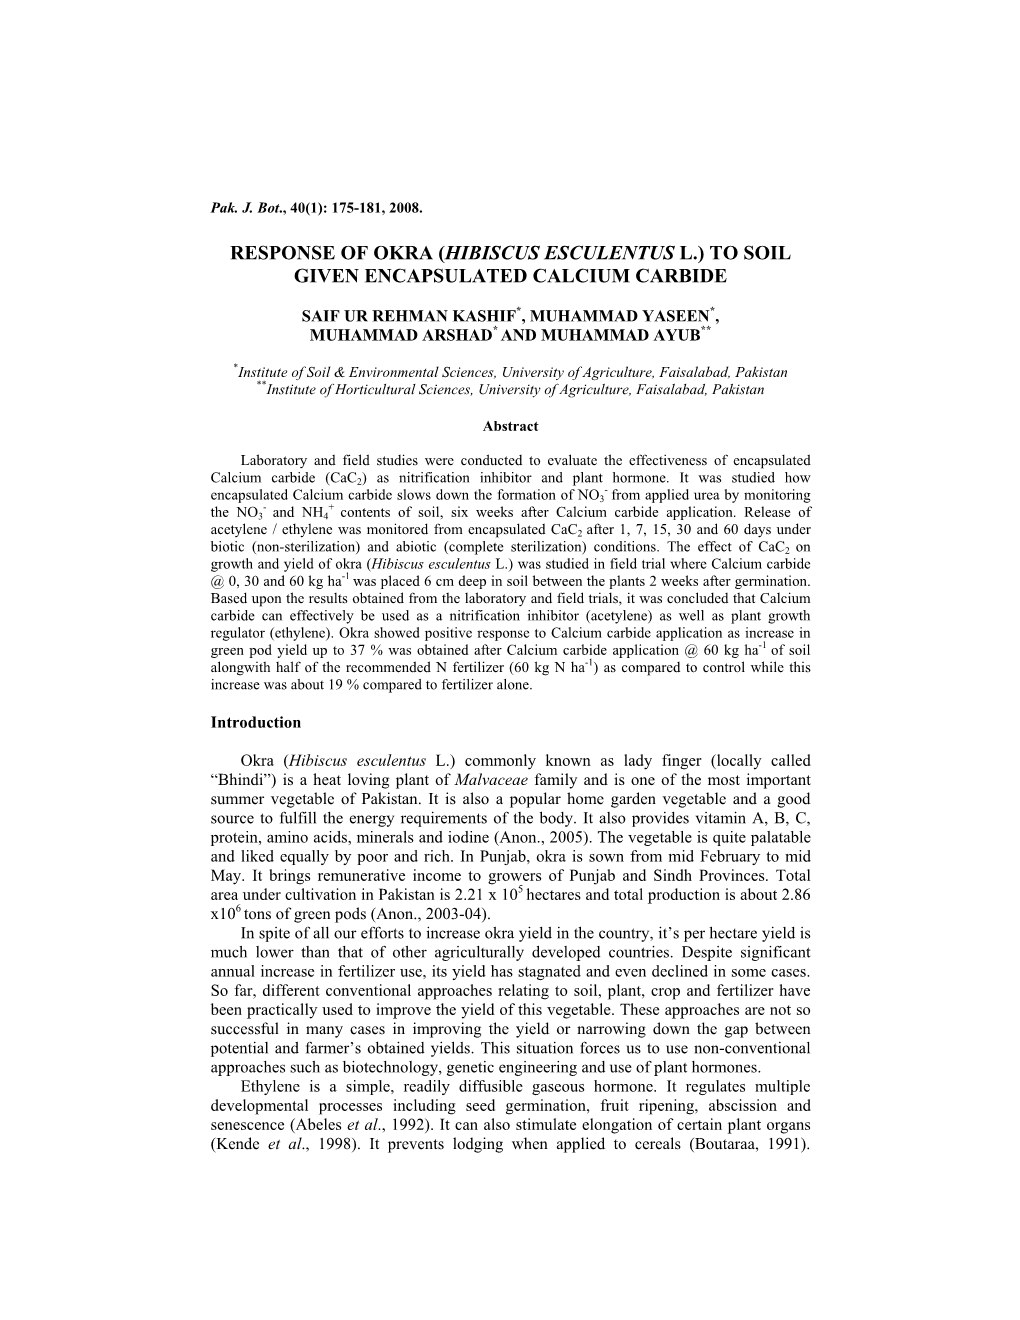 Response of Okra (Hibiscus Esculentus L.) to Soil Given Encapsulated Calcium Carbide